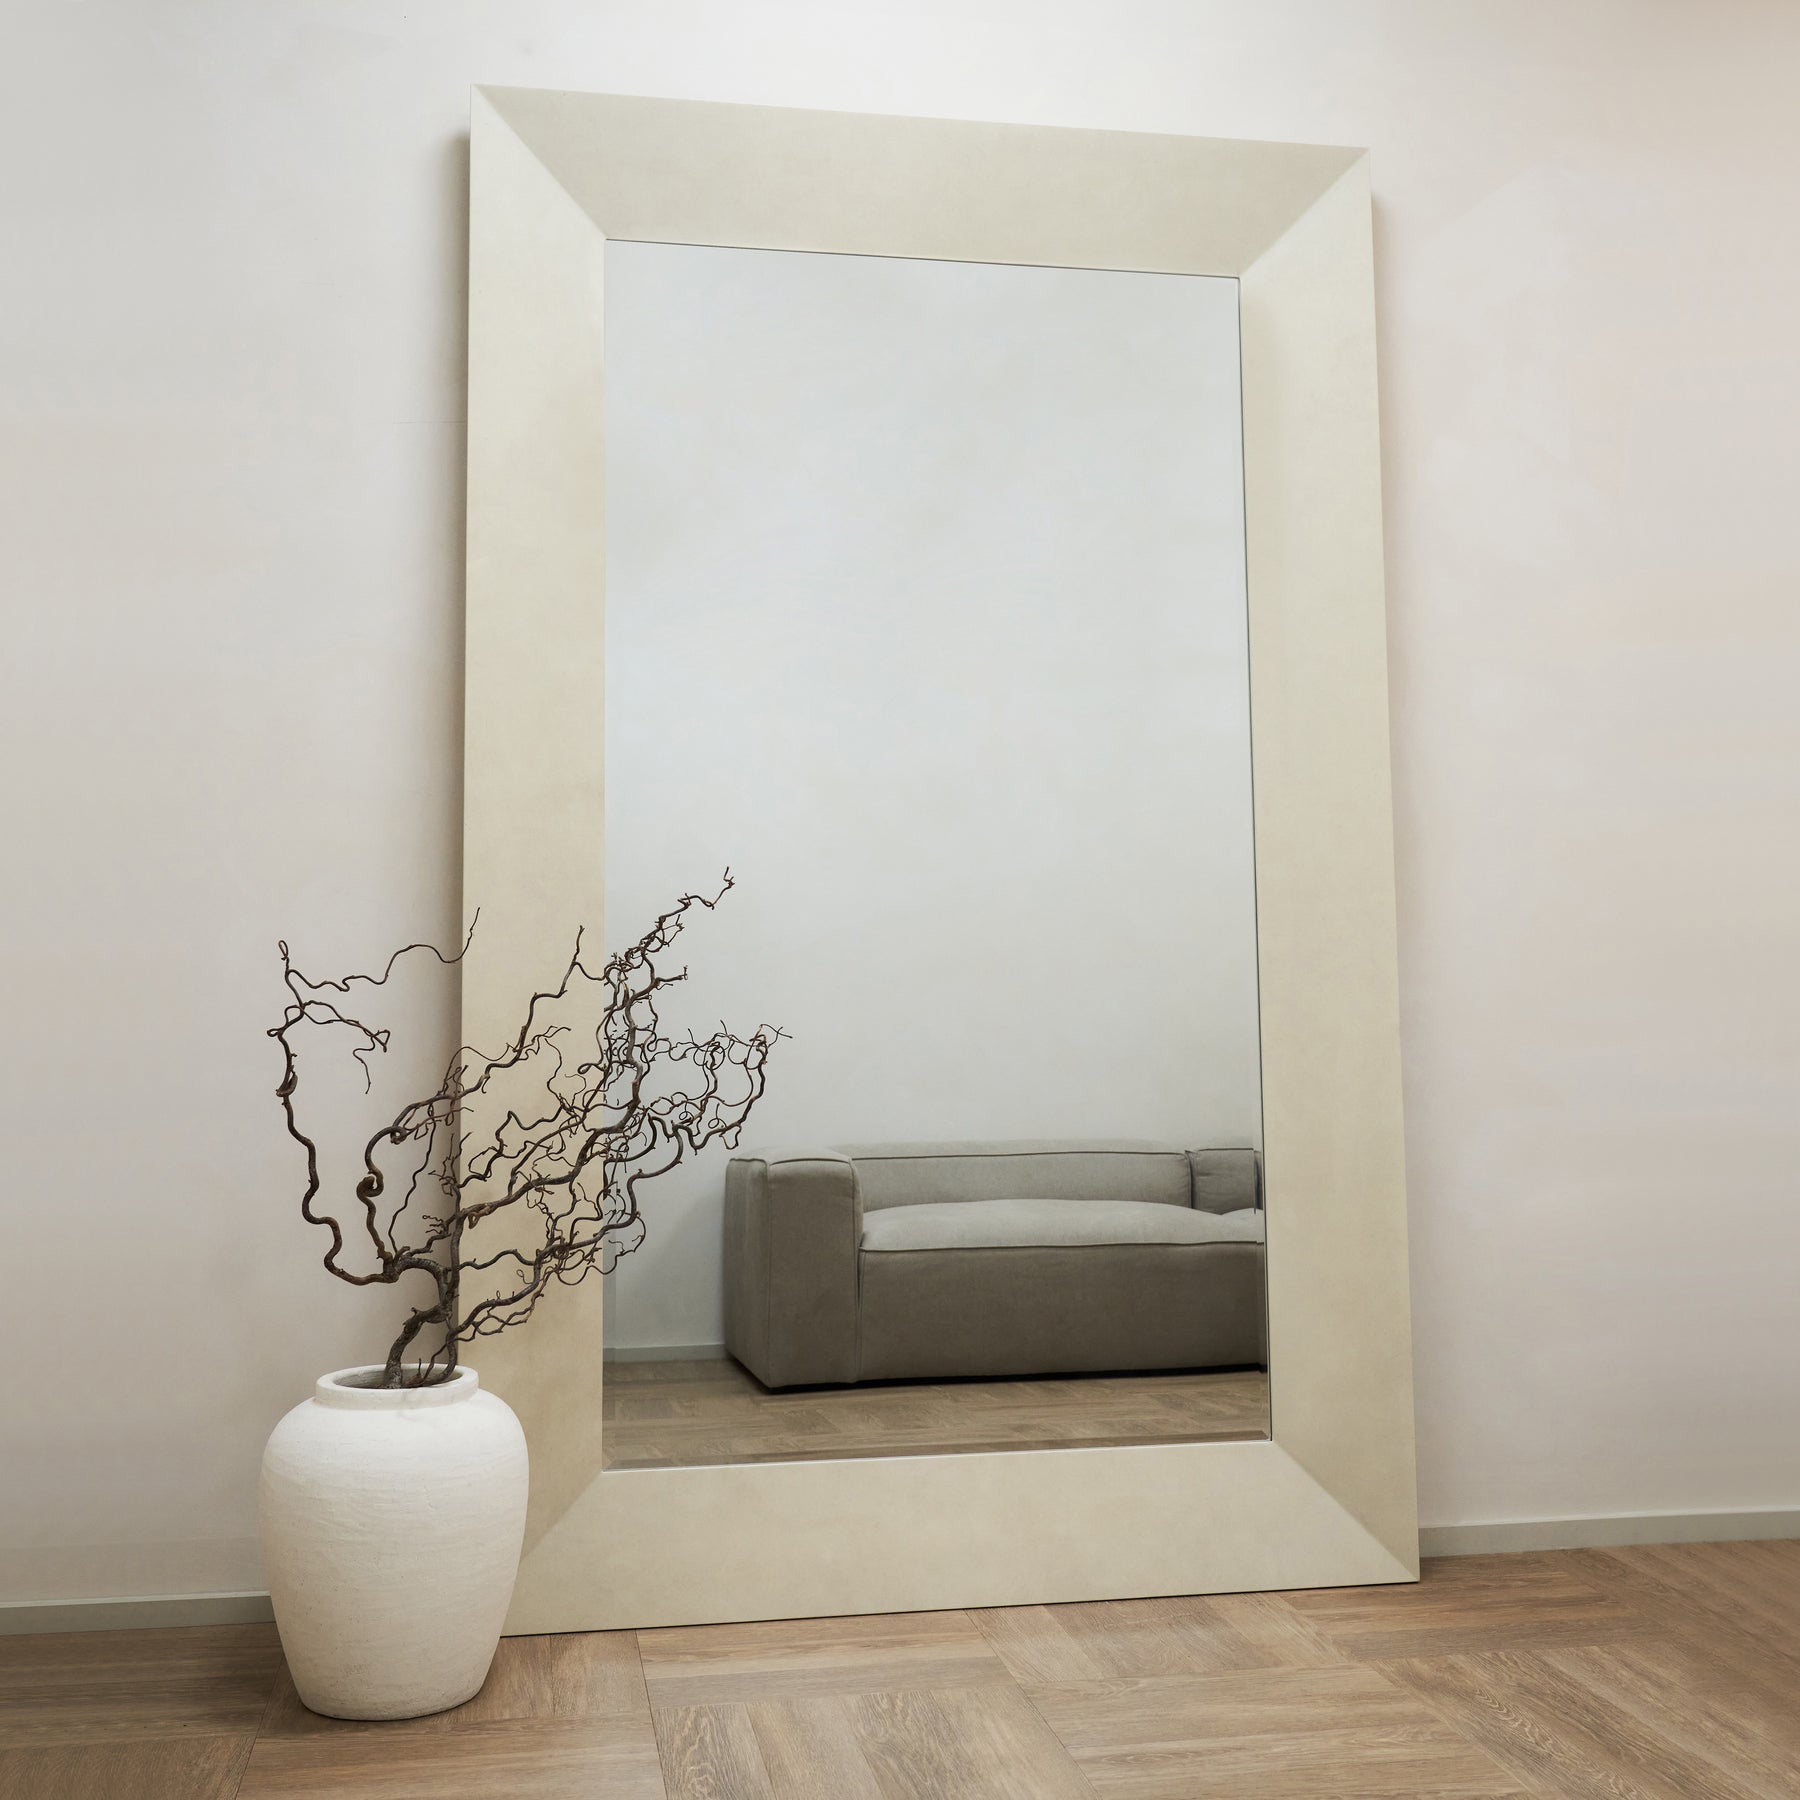 Full length extra large rectangular concrete mirror beside vase